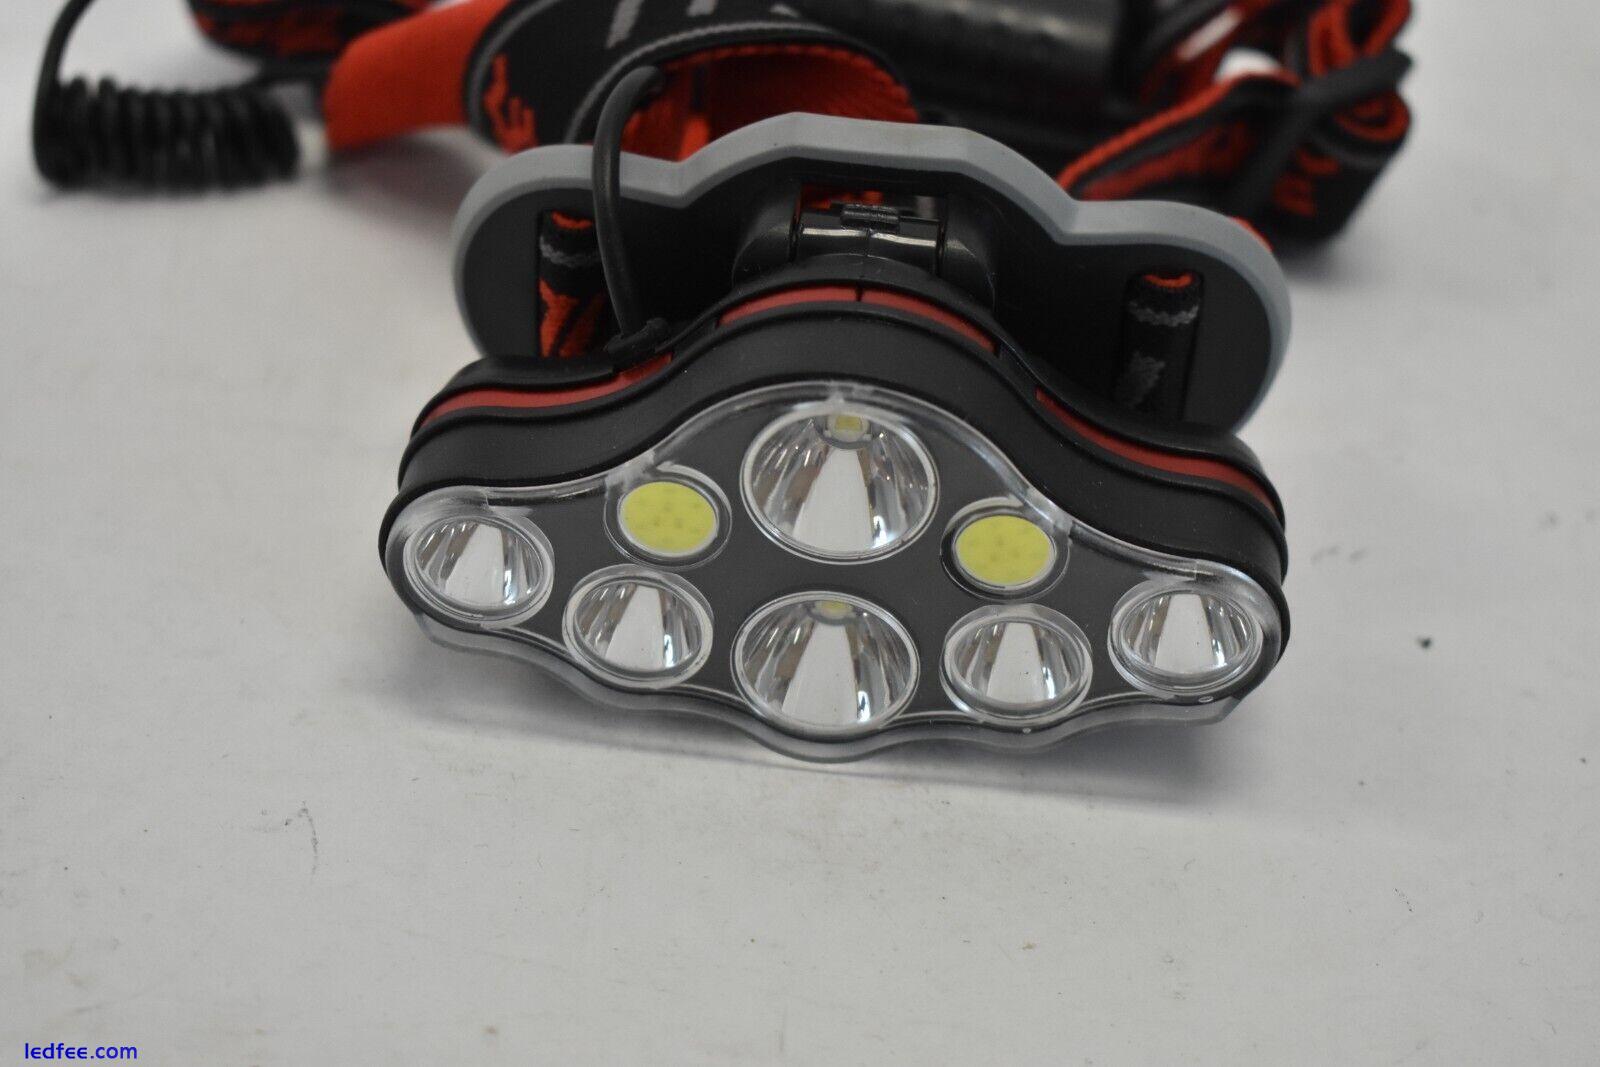 Kwydl Eye Rechargeable Headlamp Headlight Headband Red/Black For Camping Fishing 0 